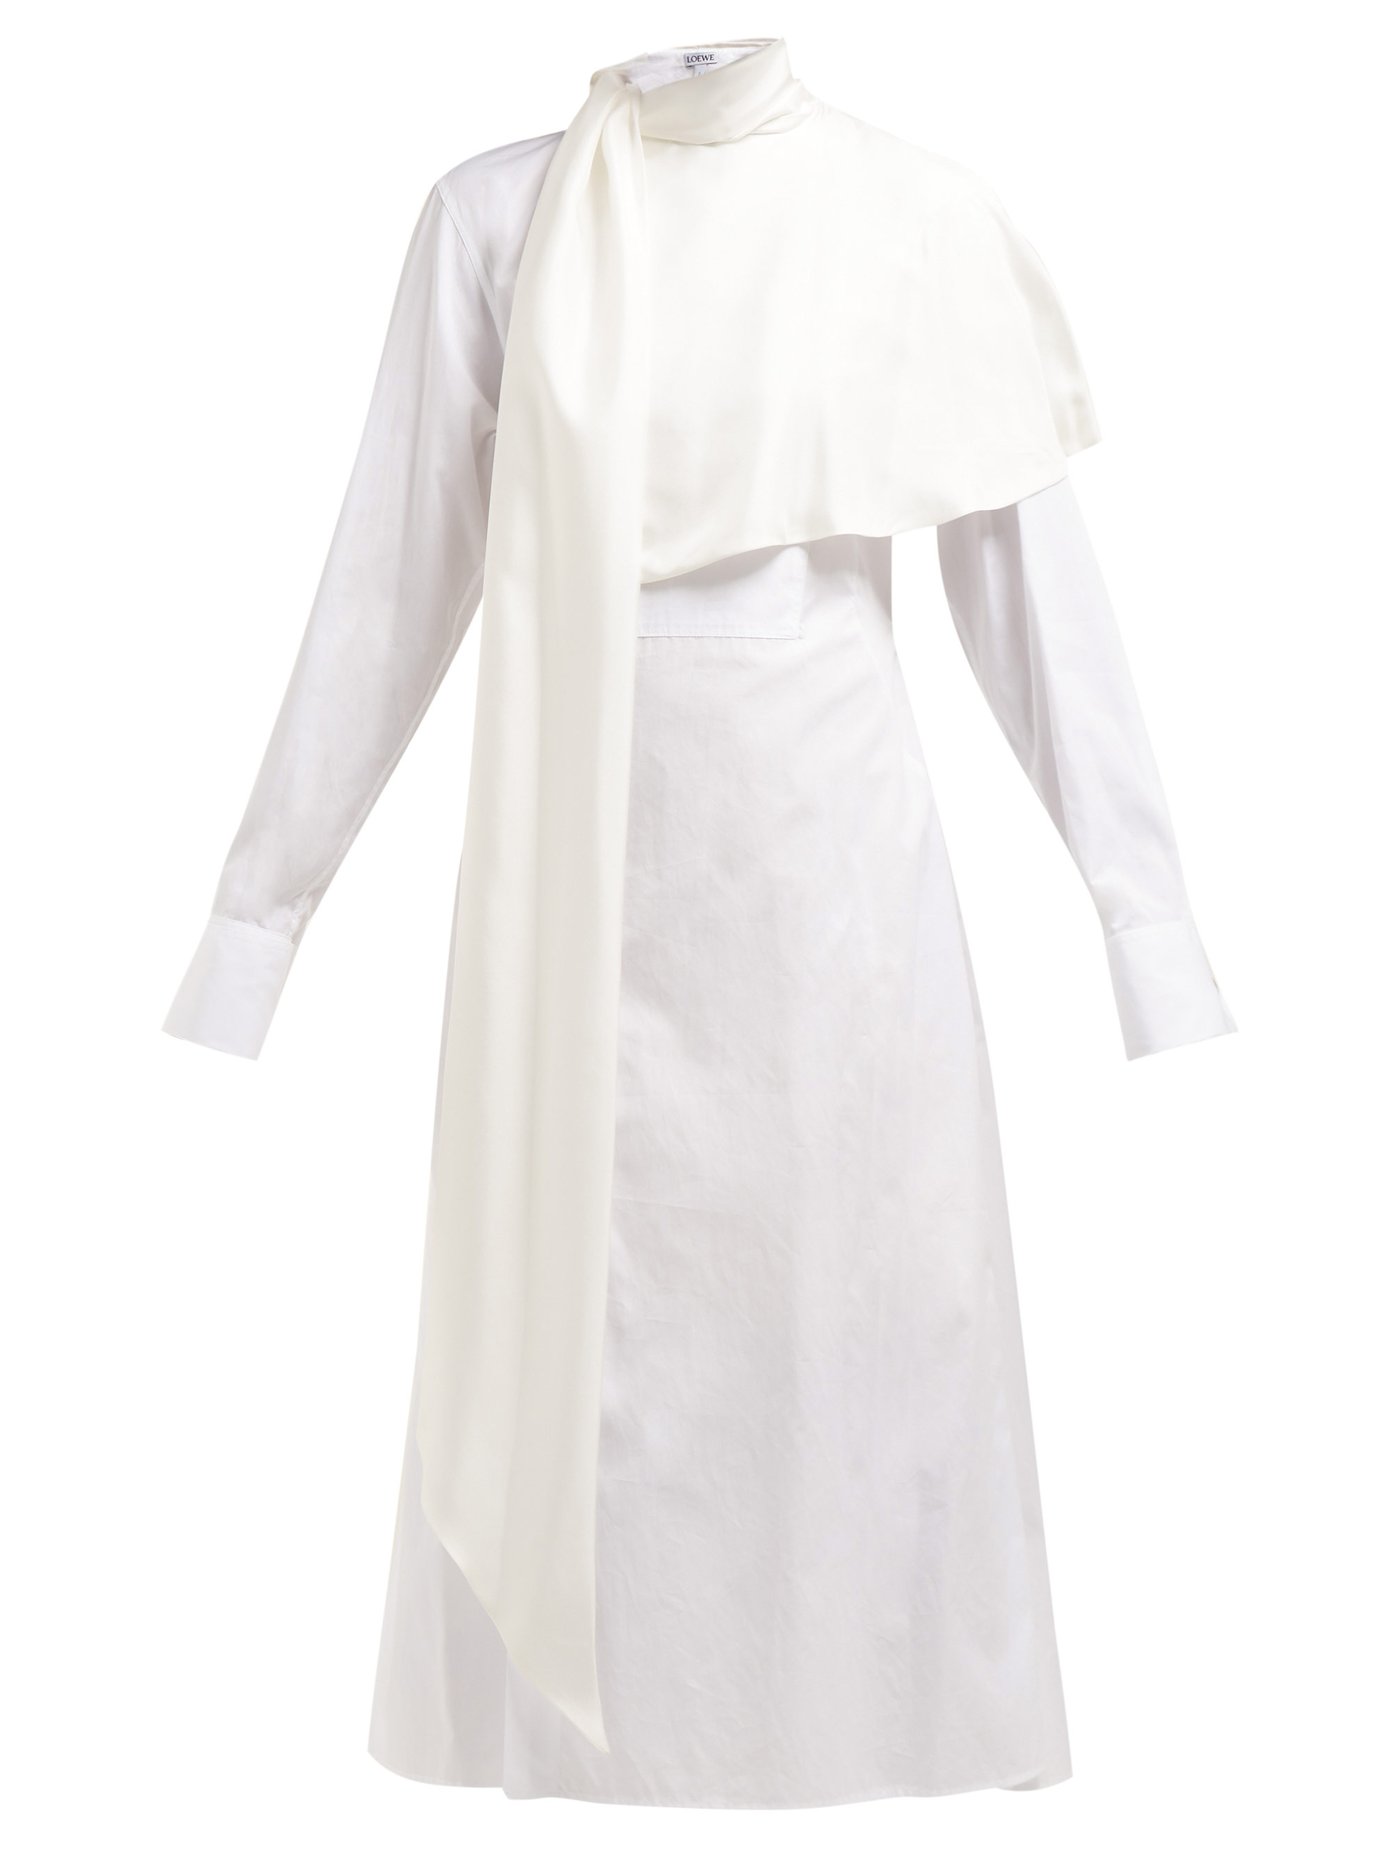 white layered shirt dress